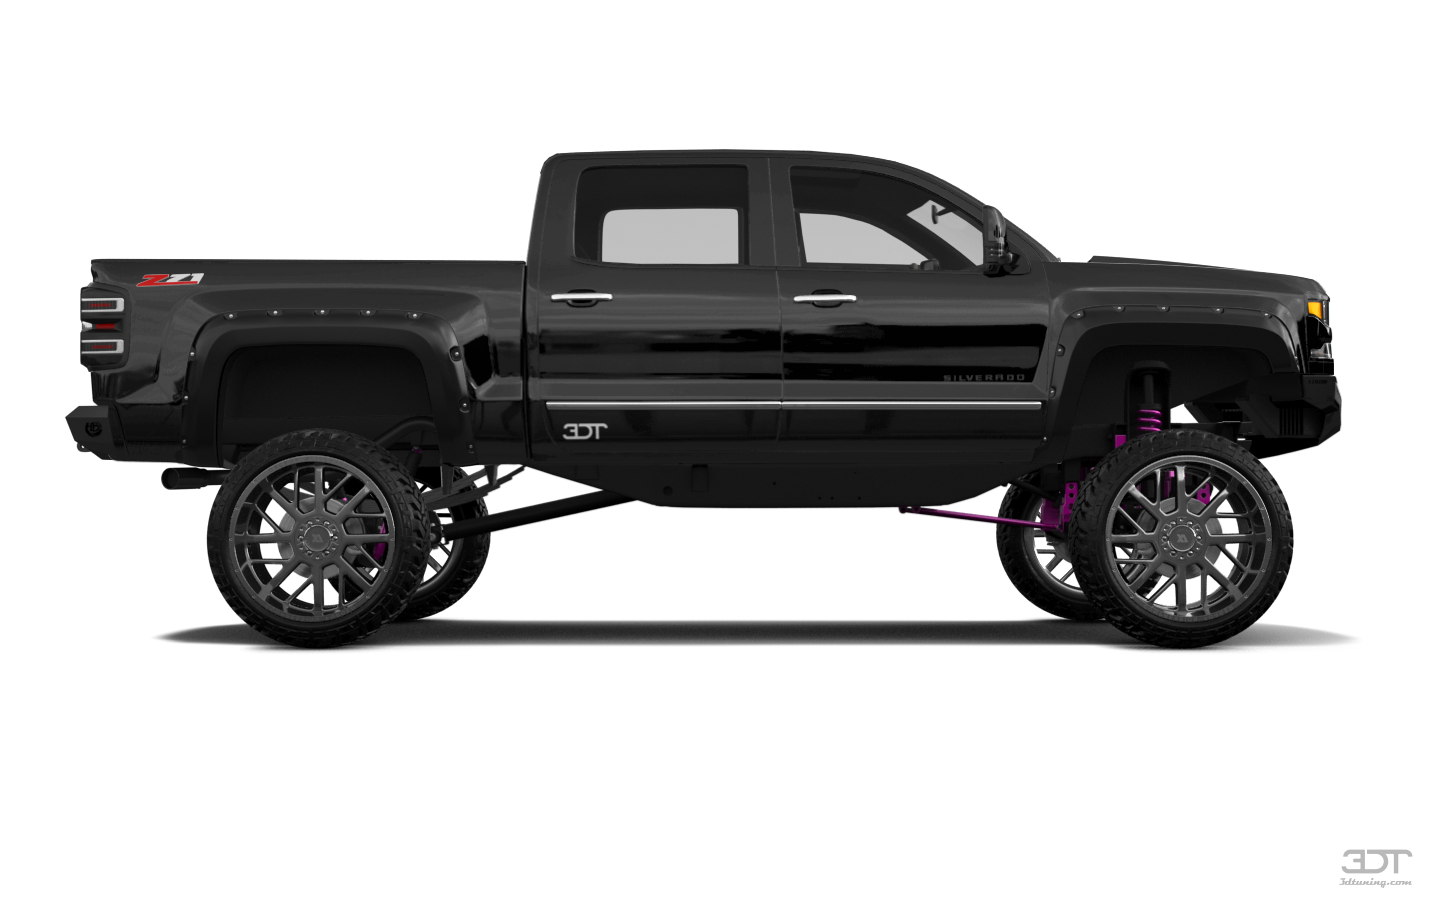 Chevrolet Silverado 1500 4 Door pickup truck 2016 tuning